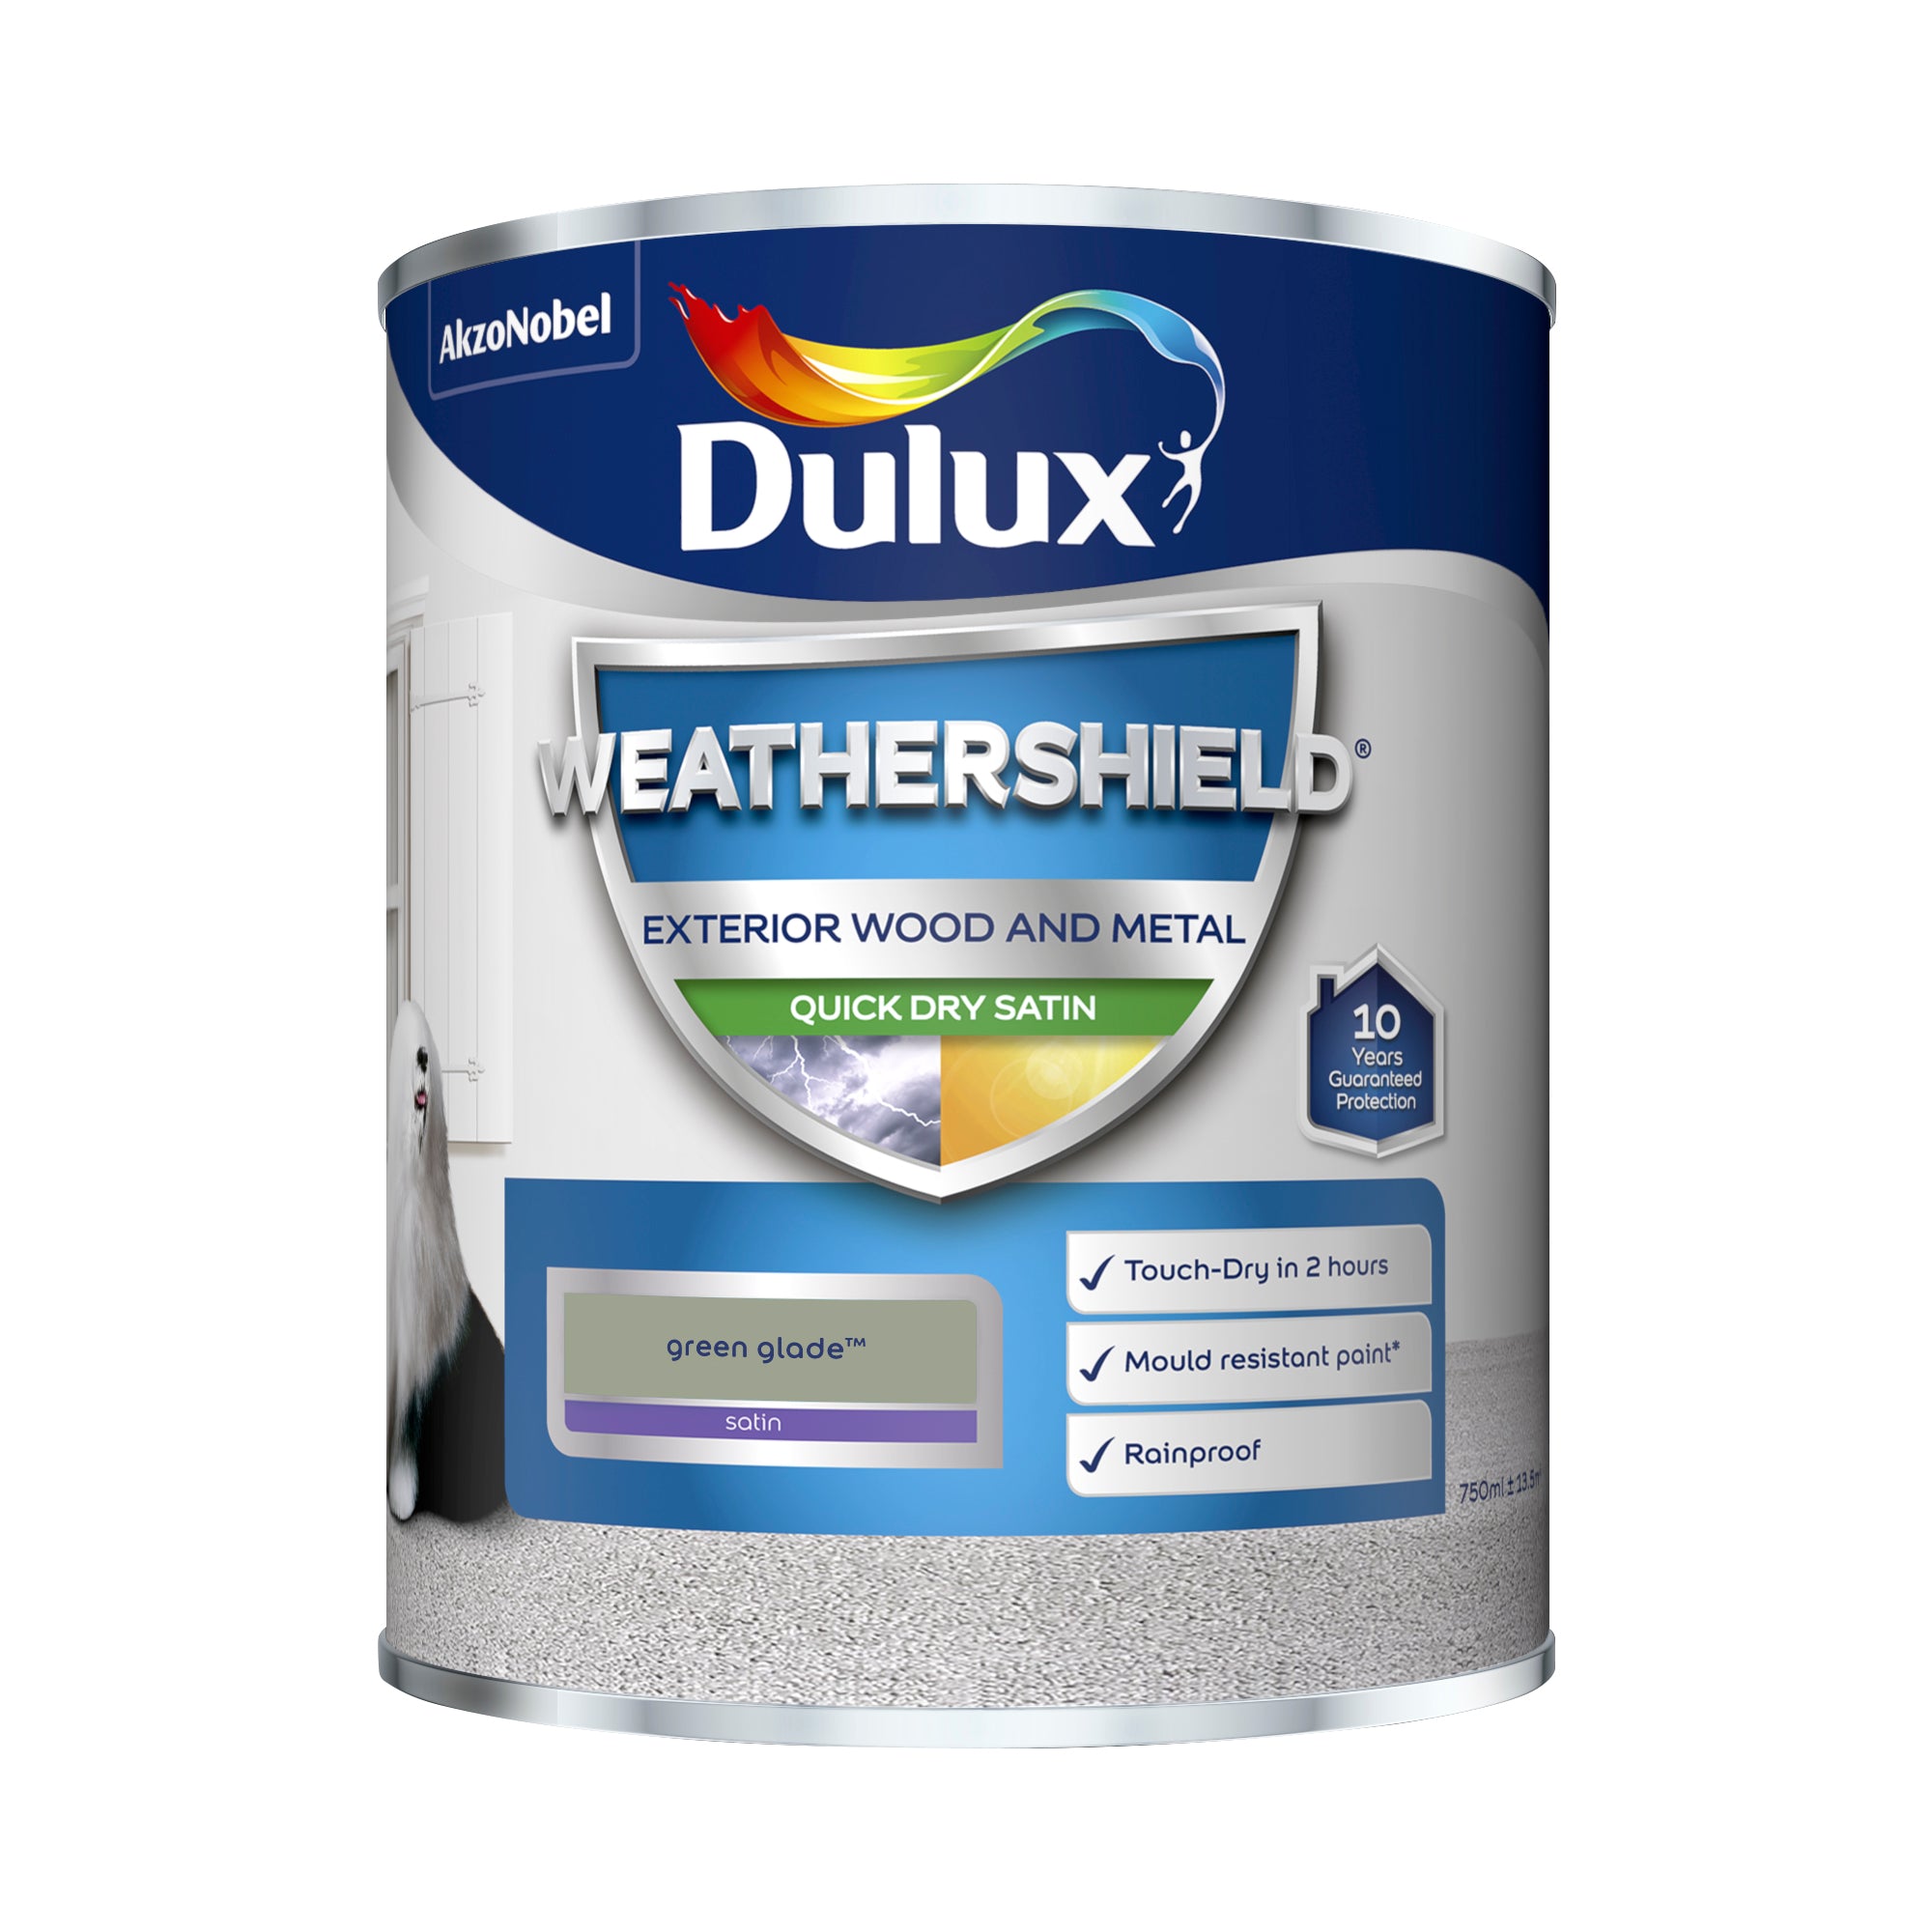 Dulux Weathershield Quick Dry Satin Green Glade 750ml